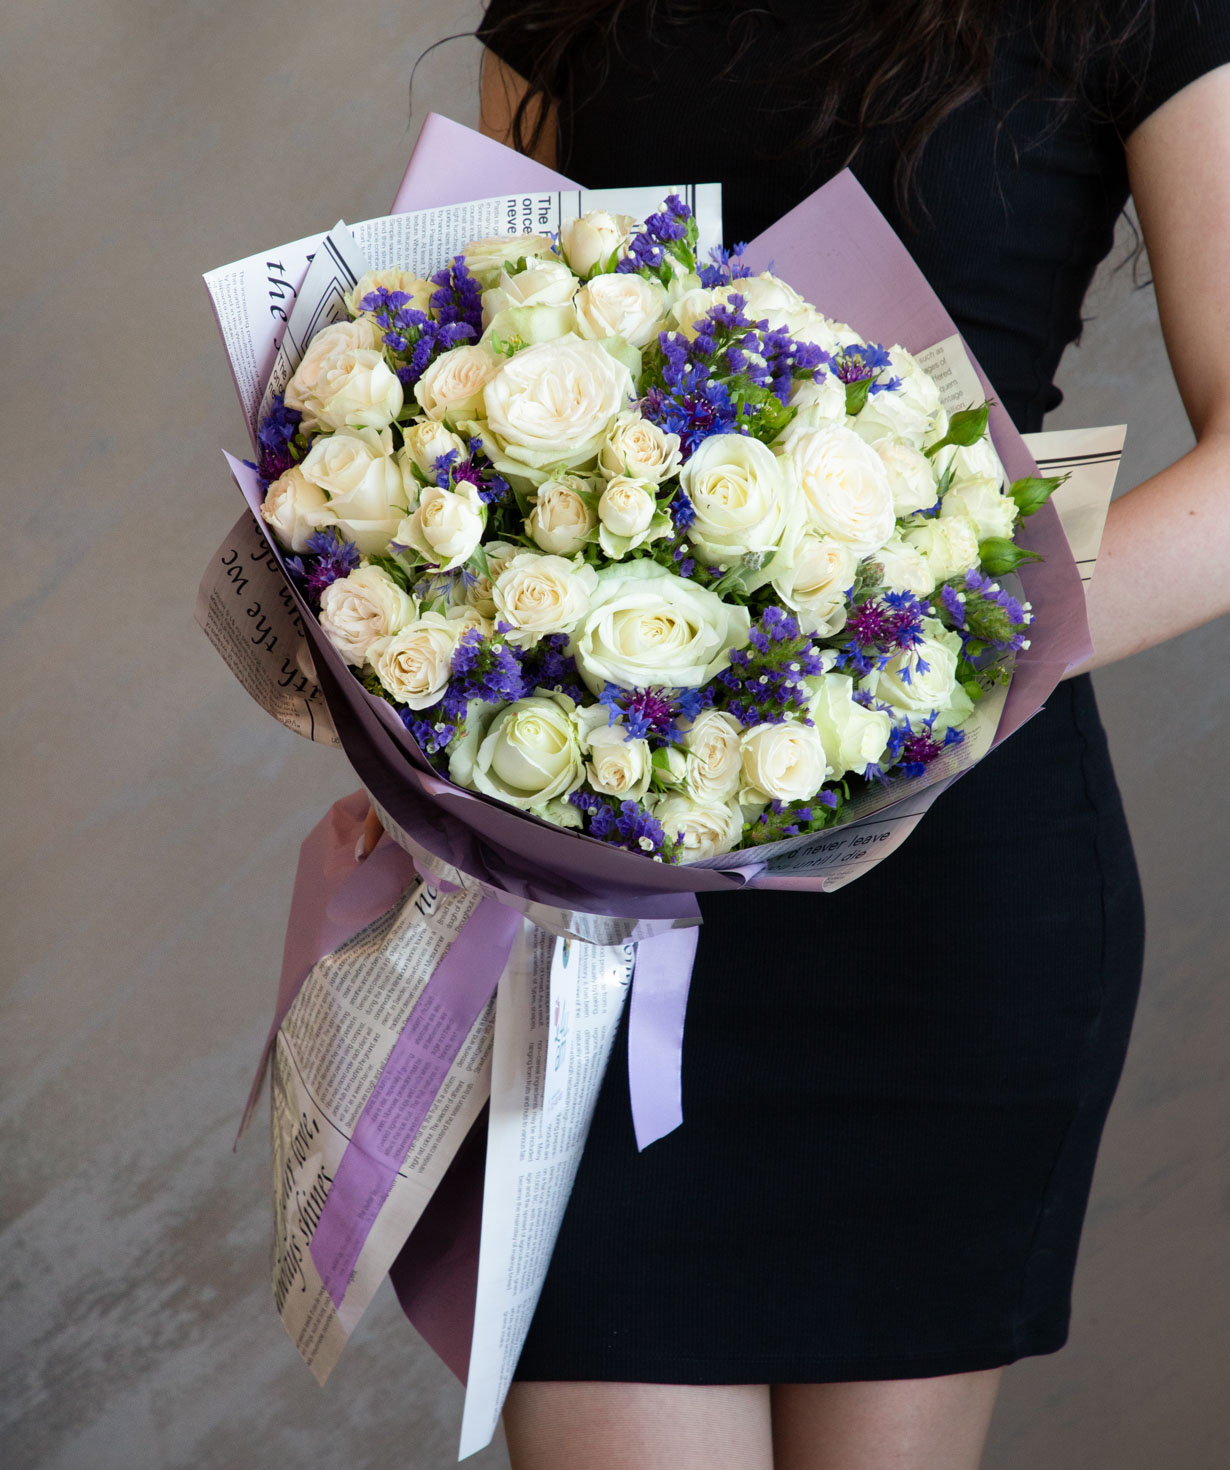 Bouquet `Sanem` with roses and limoniums